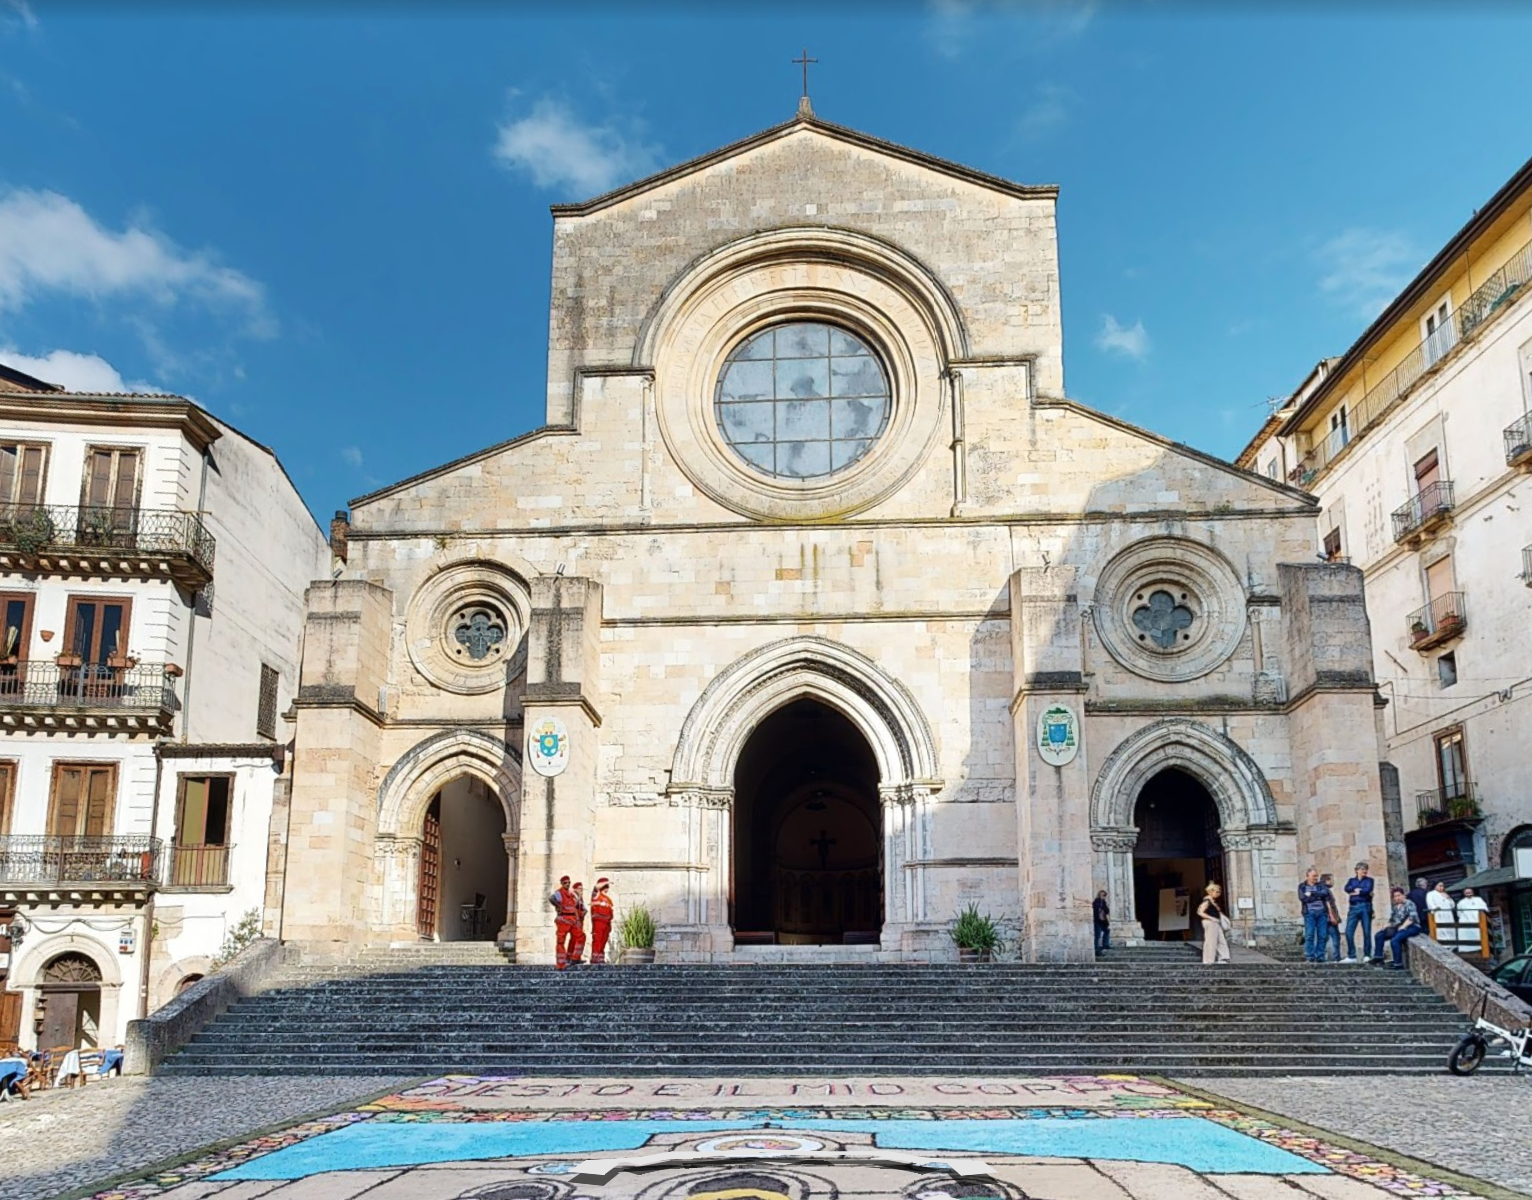 Duomo by Google Earth